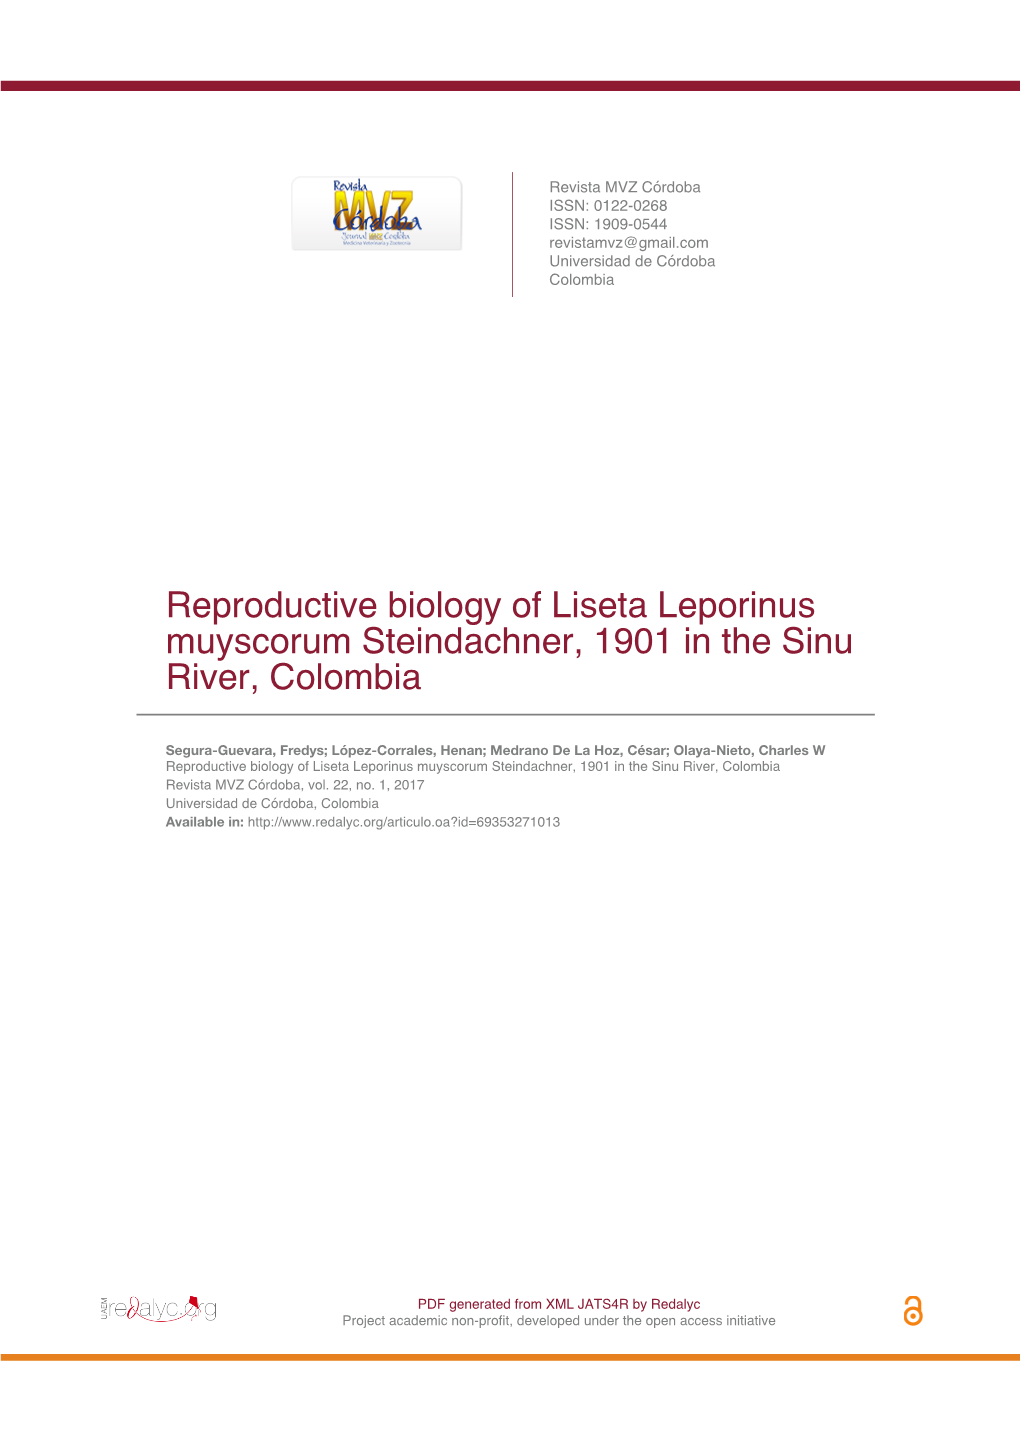 Reproductive Biology of Liseta Leporinus Muyscorum Steindachner, 1901 in the Sinu River, Colombia